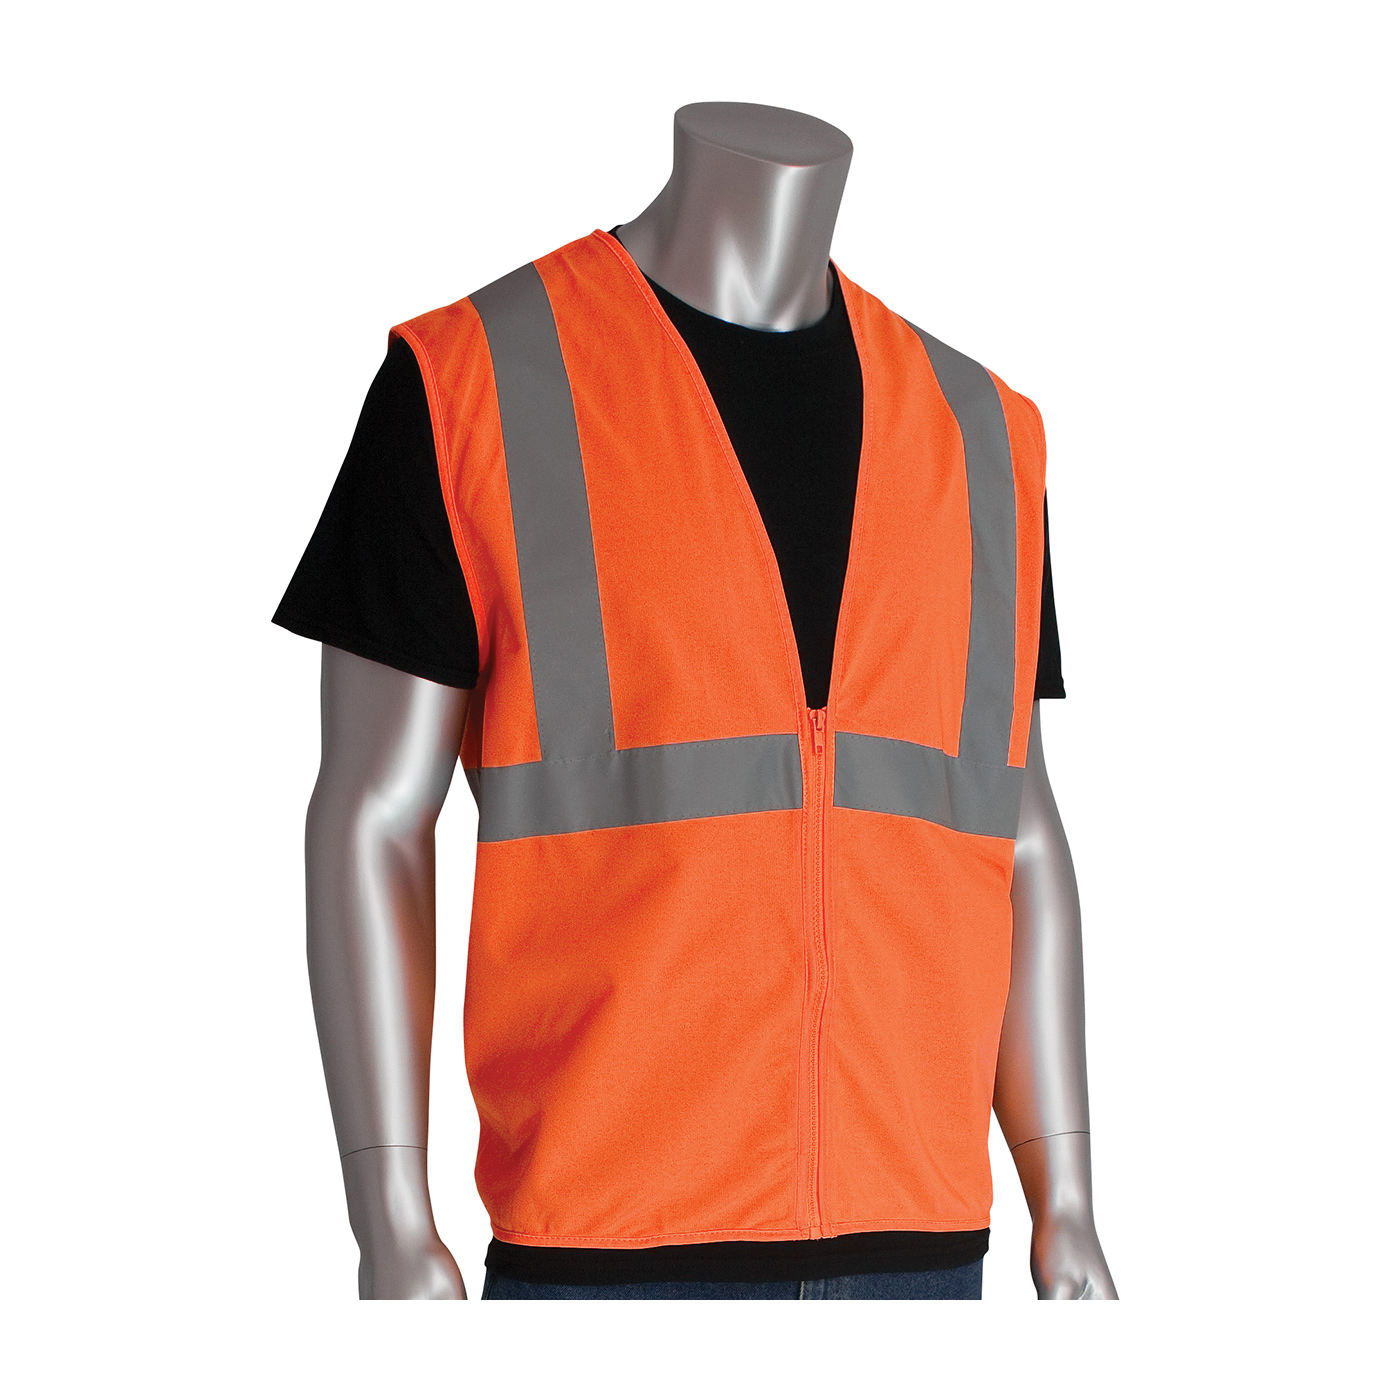 PIP® 302-WCENGZOR-M Standard Solid Vest, M, Hi-Viz Orange, Polyester Mesh, Zipper Closure, ANSI Class: Class 2, Specifications Met: ANSI 107 Type R Class 2